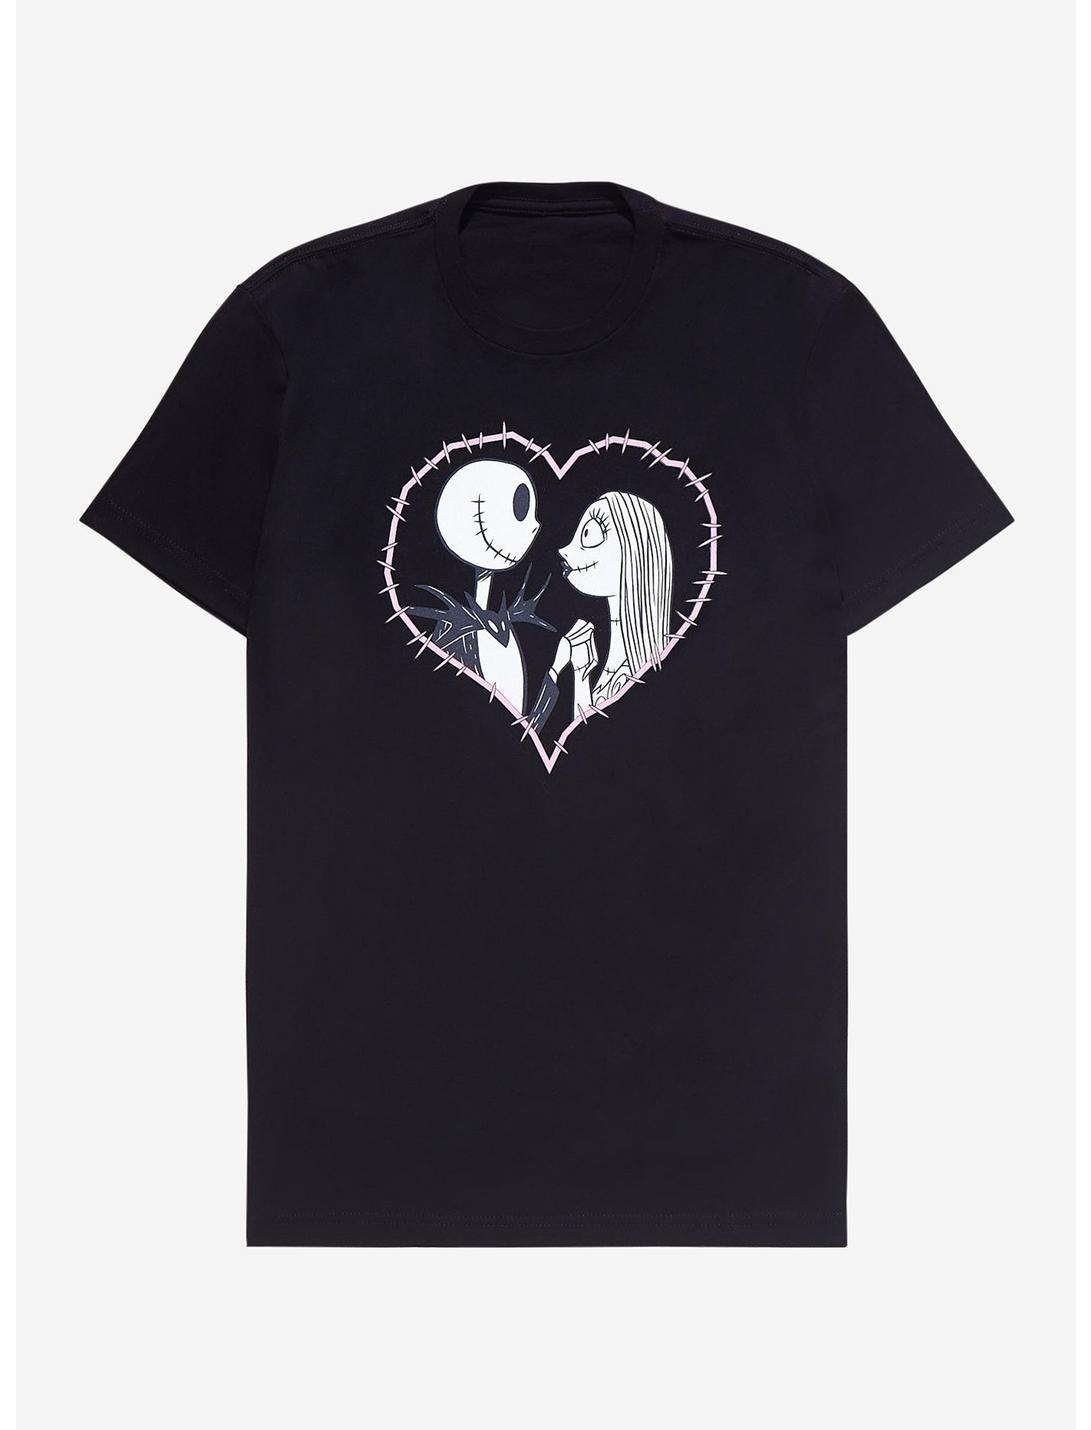 Nightmare Before Christmas Jack et Sally Love Cool T-Shirt Top Hommes Femmes Unisexe